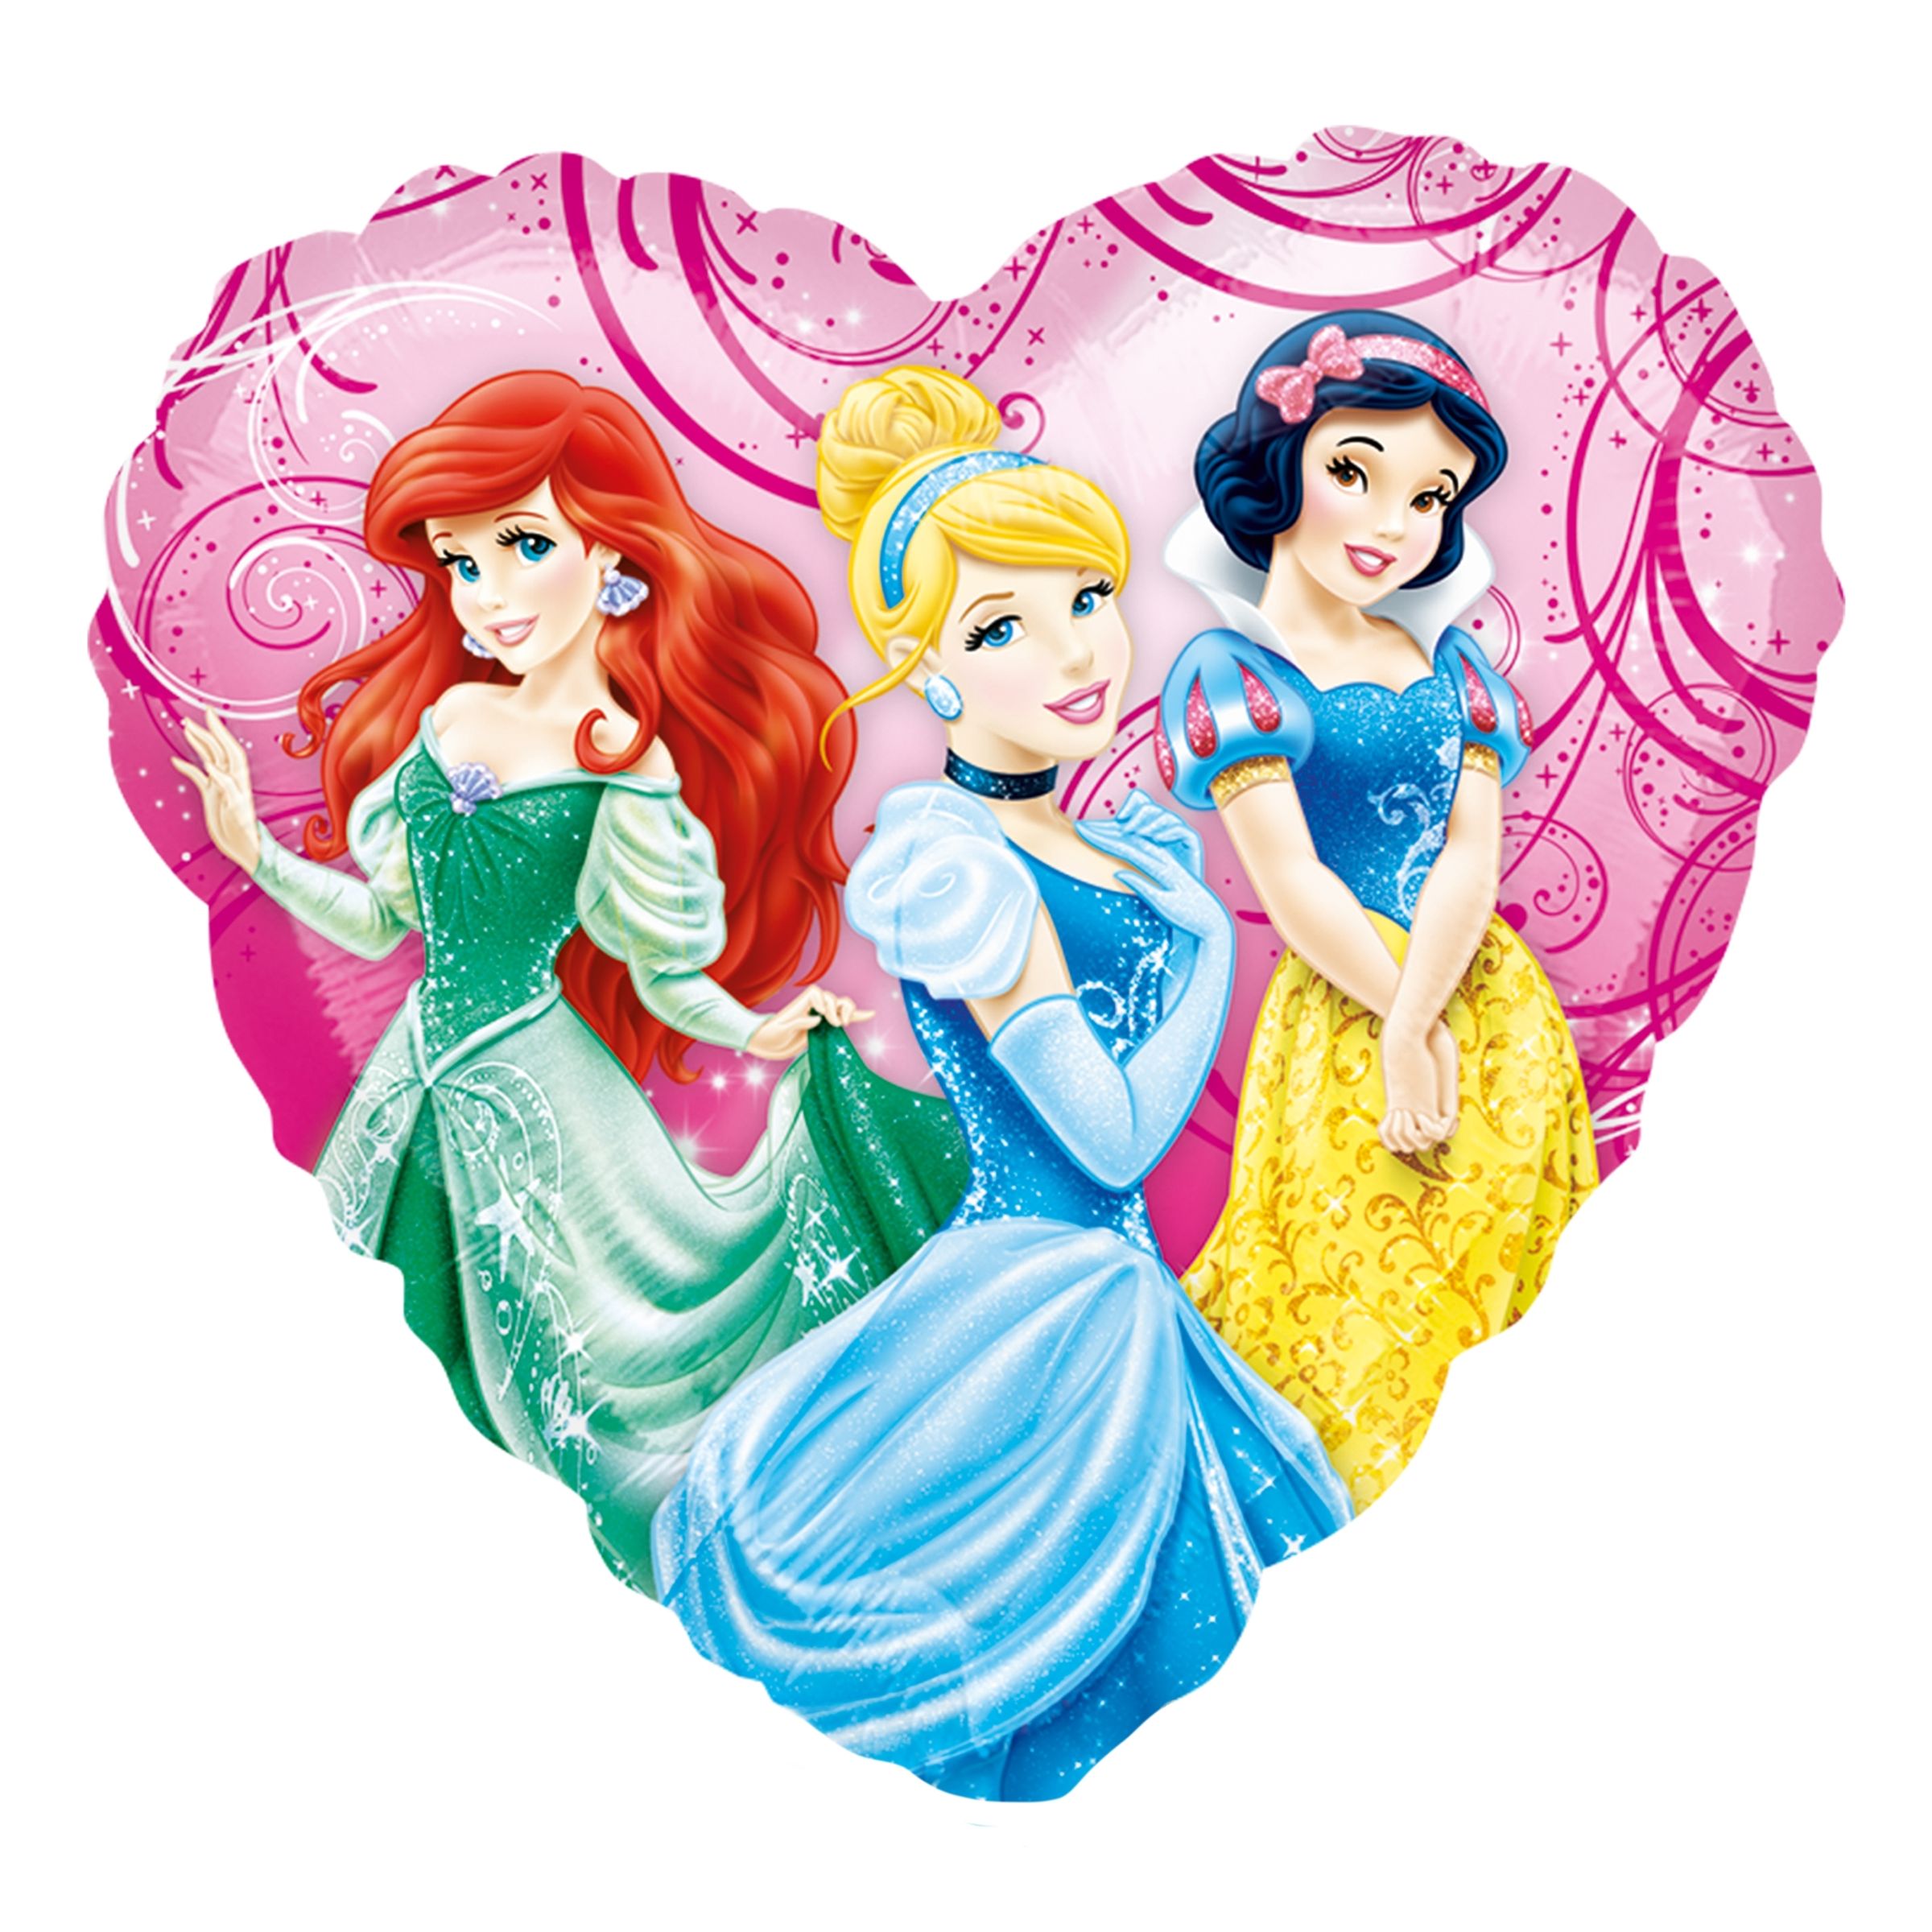 Folieballong Disneyprinsessor